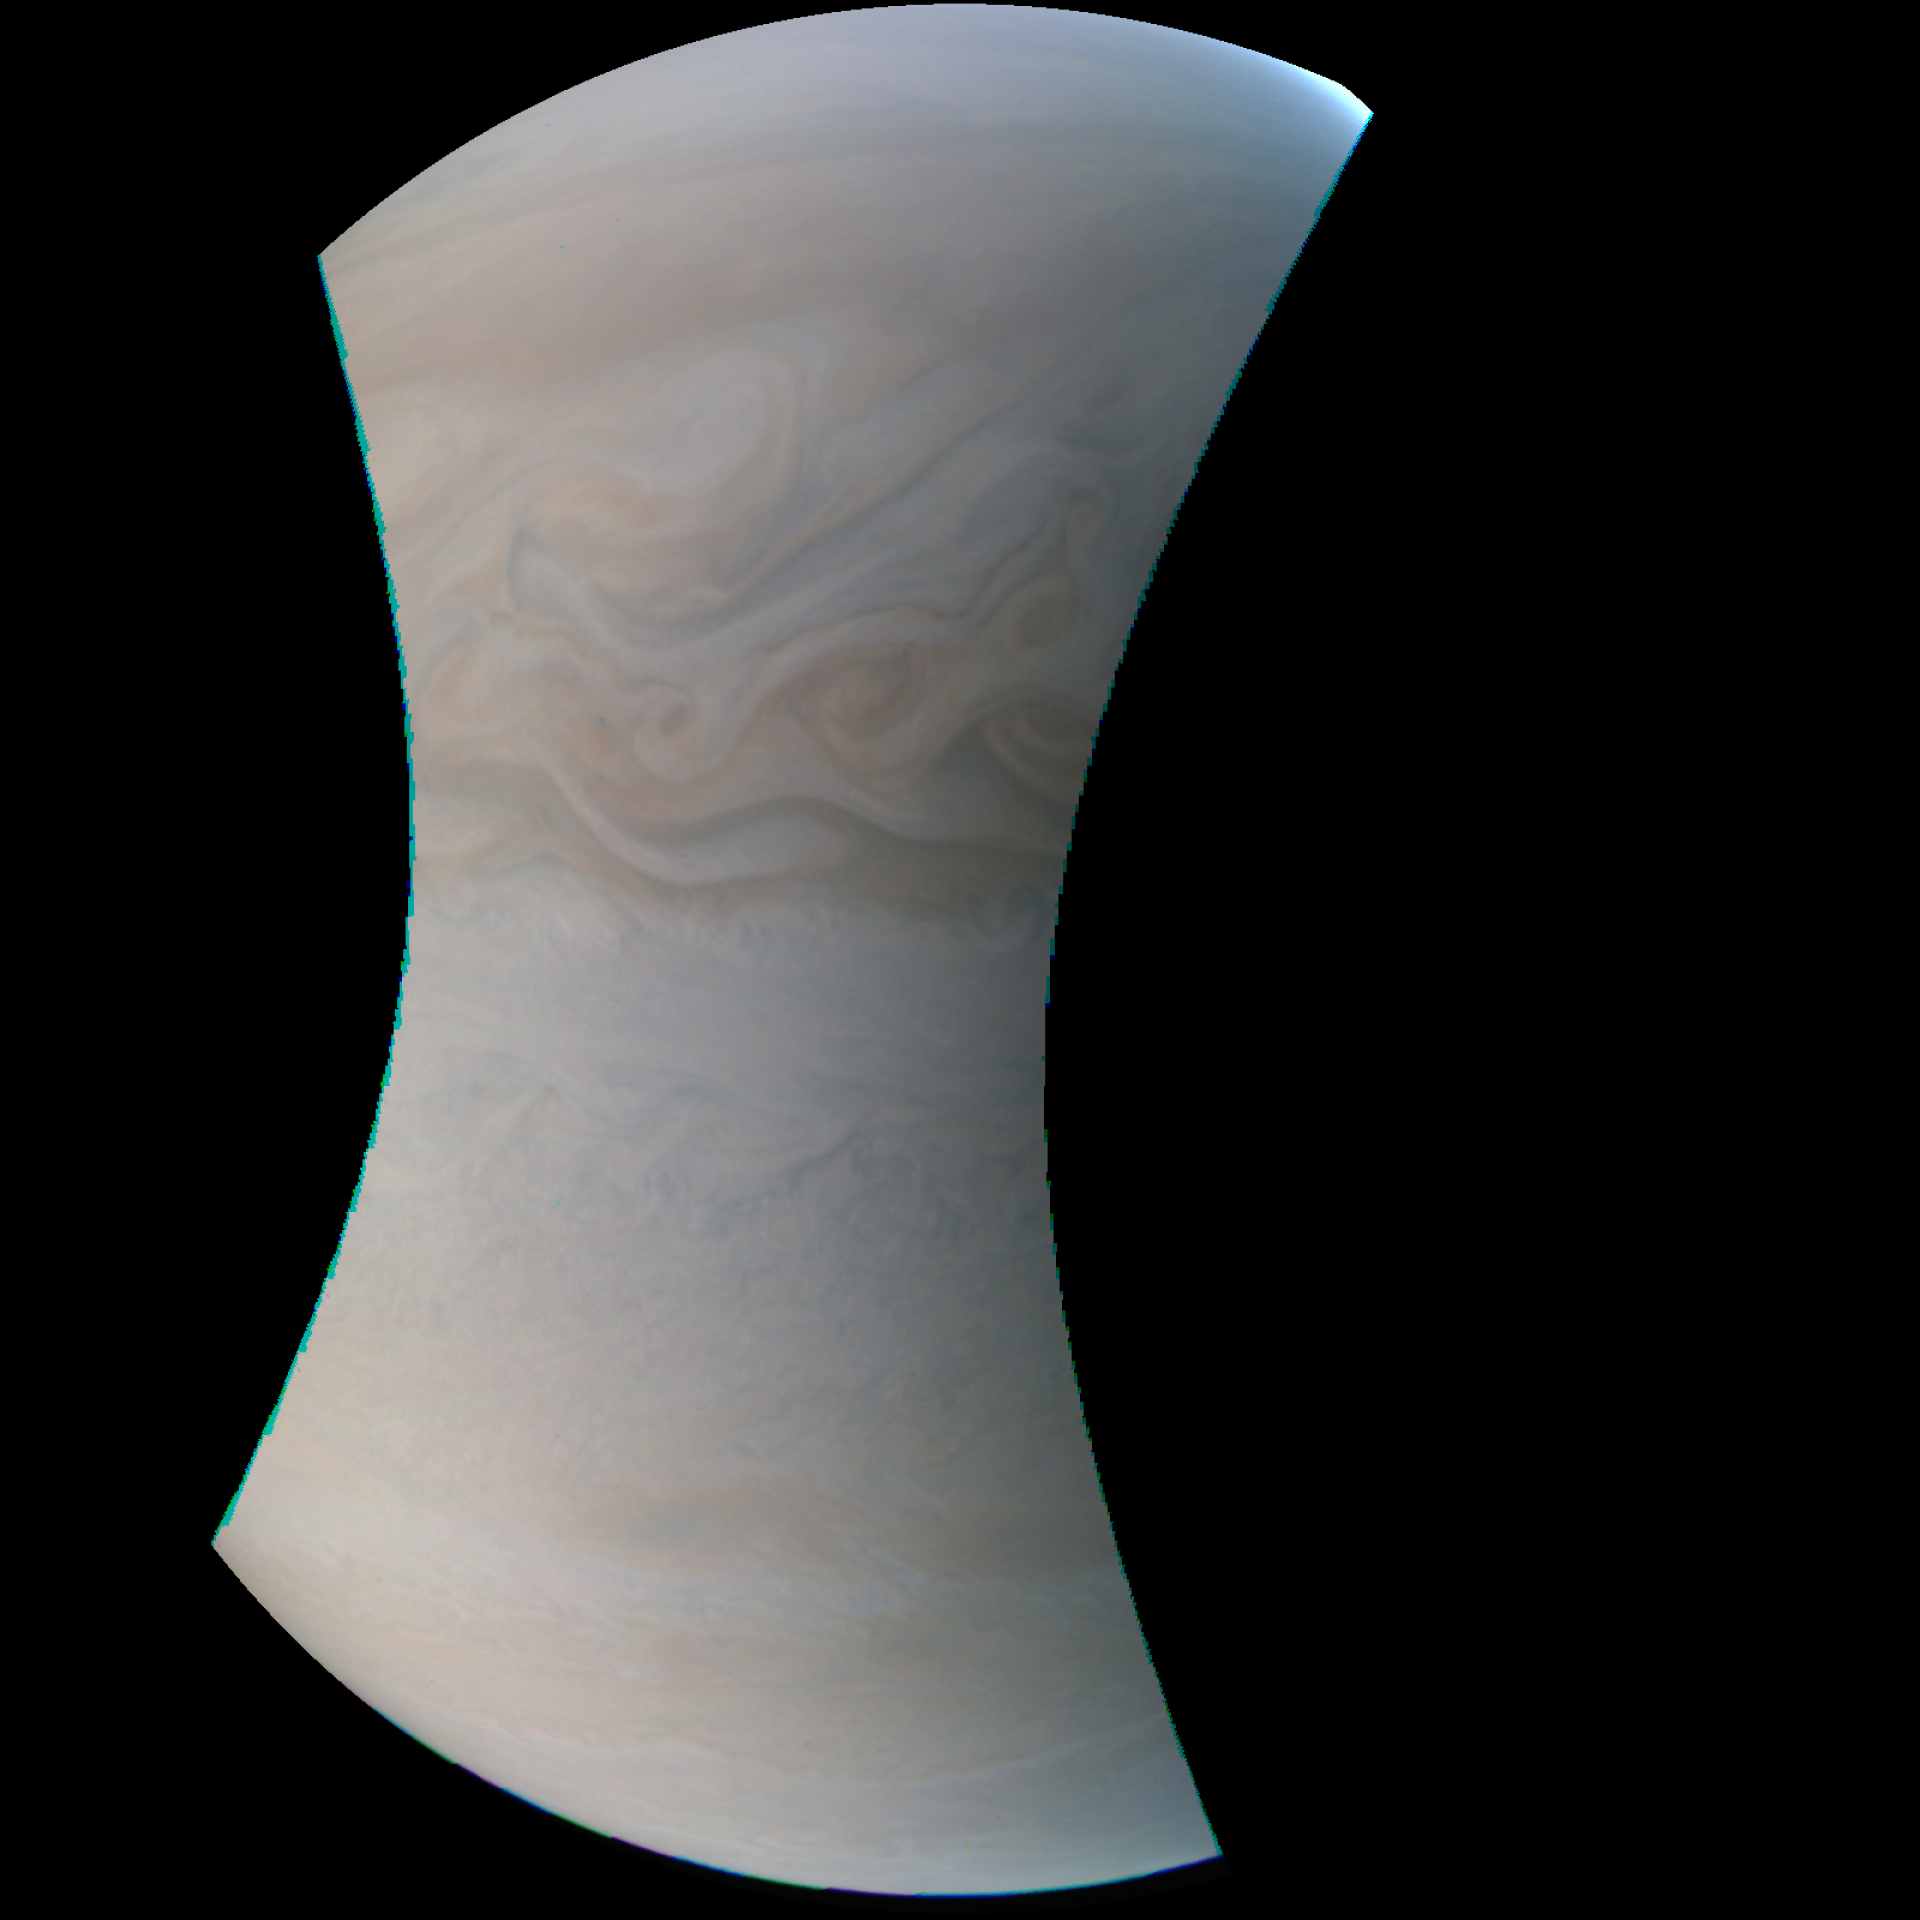 New Close-Up Image Of Jupiter’s Turbulent Region Is Breathtaking